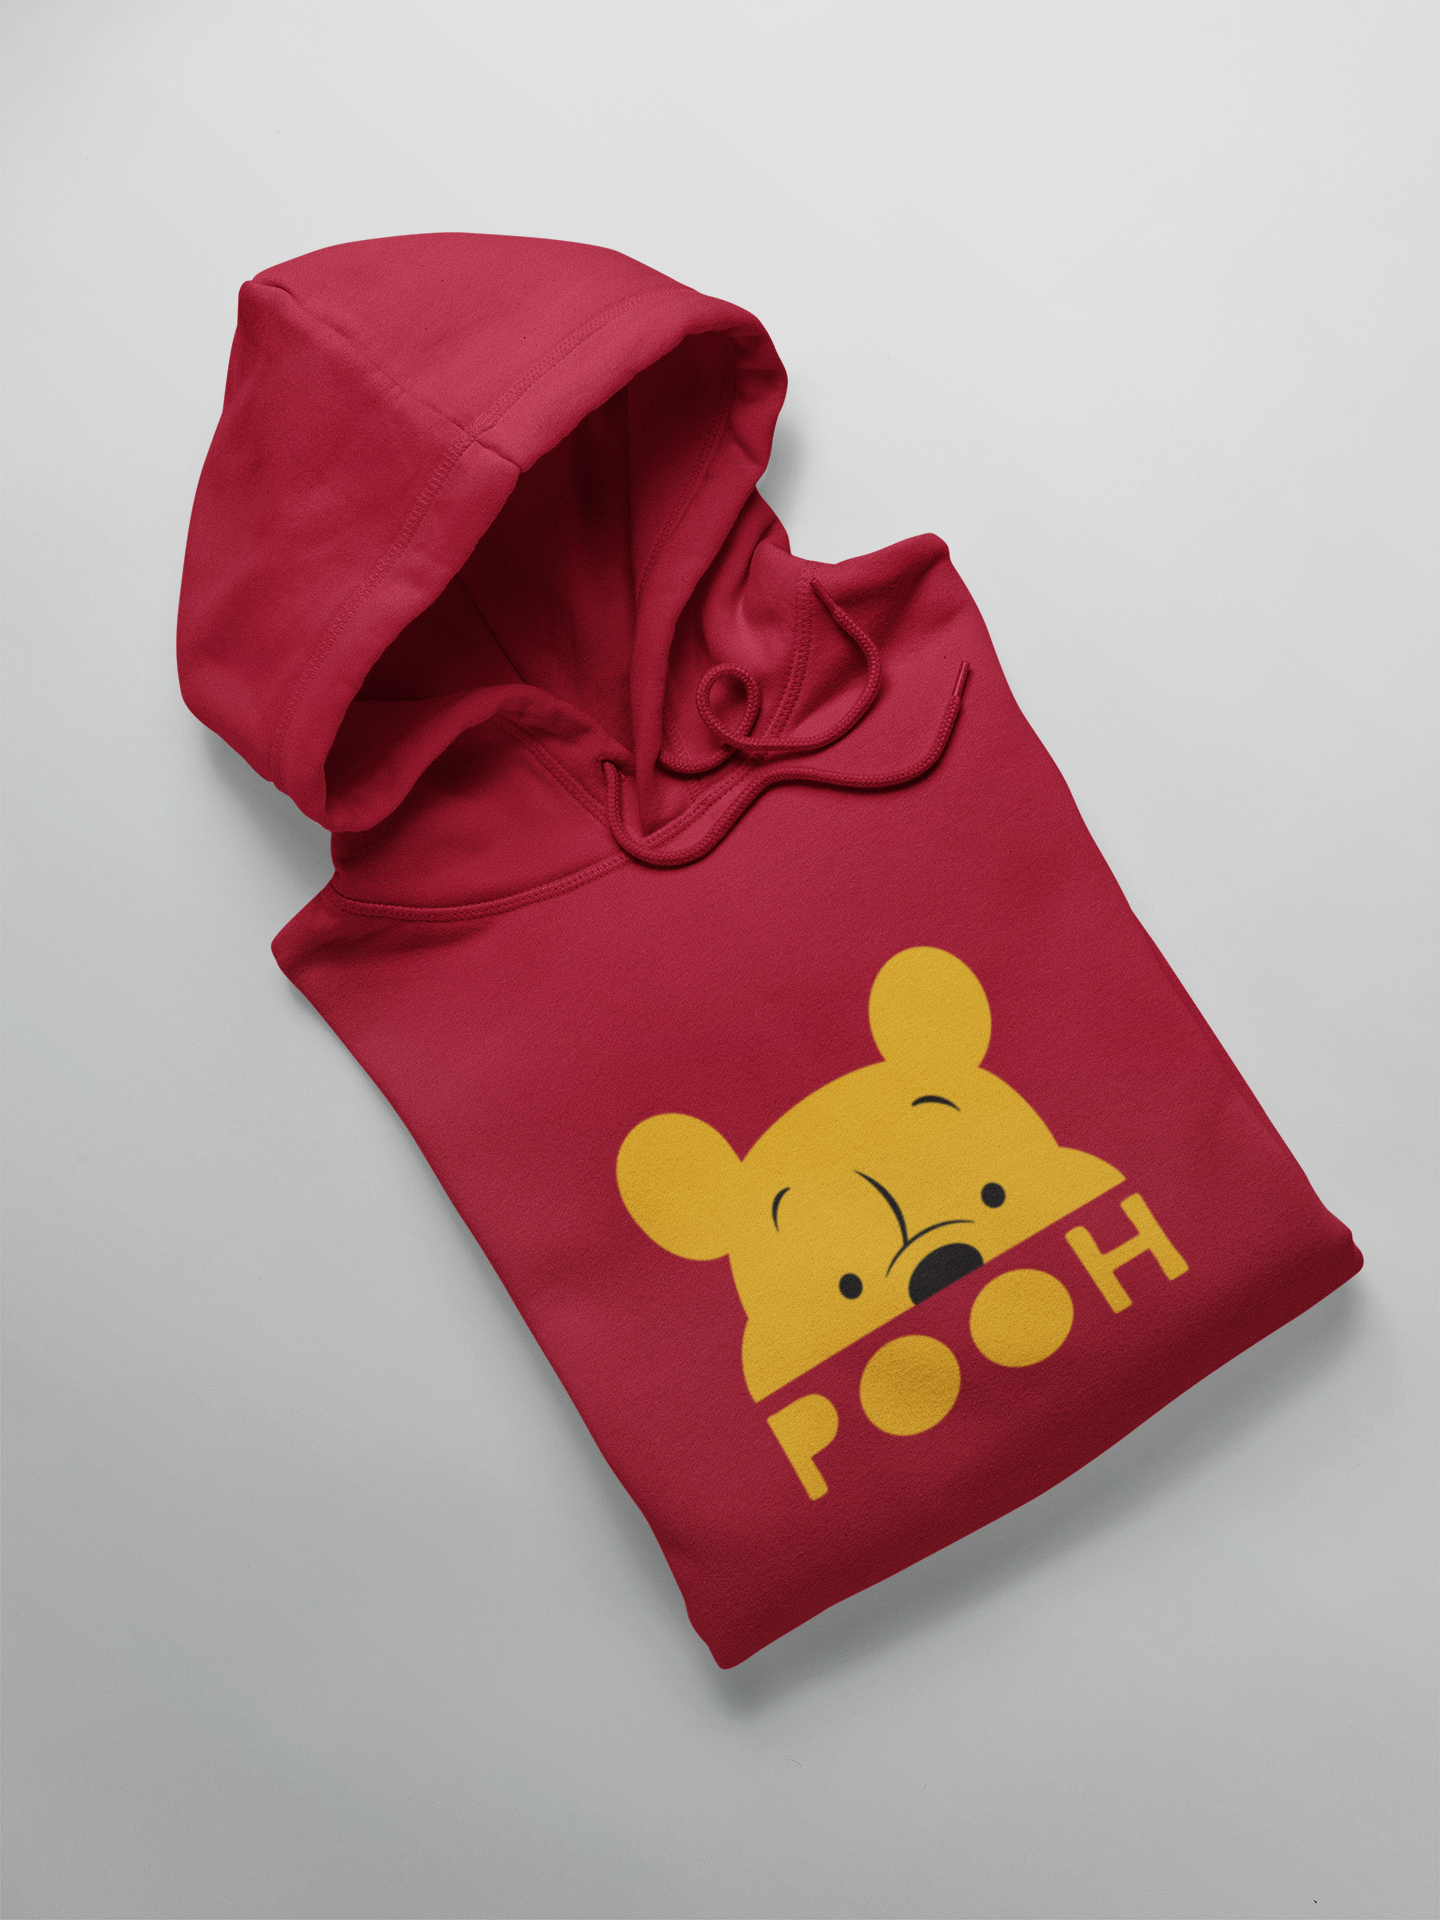 POOH : Winnie the Pooh & Pals - WINTER HOODIES RED